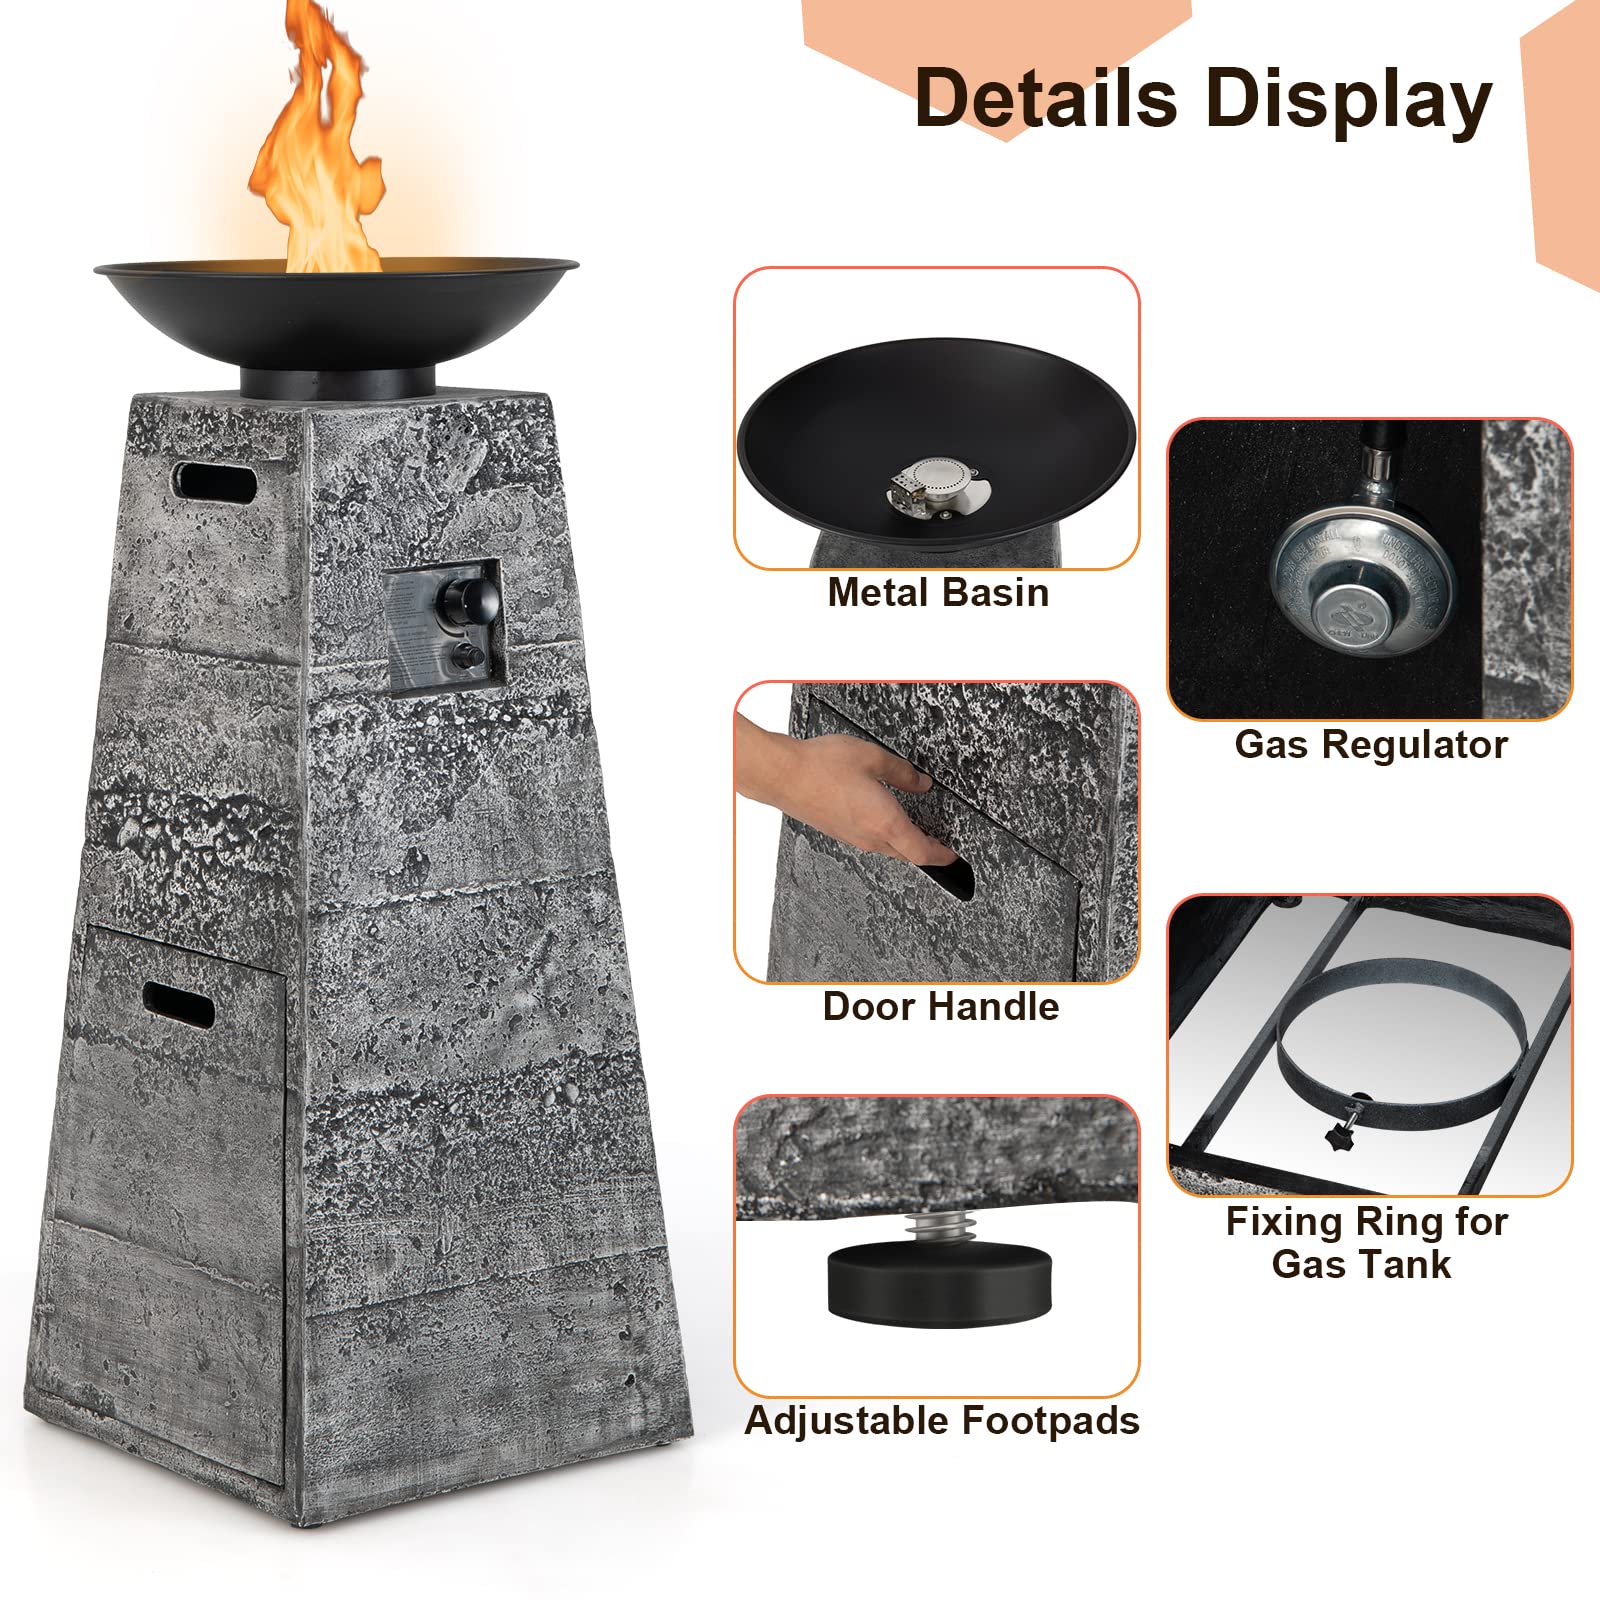 Giantex Outdoor Propane Fire Pit - 48 Inch Propane Fire Bowl Column with Lava Rocks & PVC Cover, 30,000 BTU Heat Output